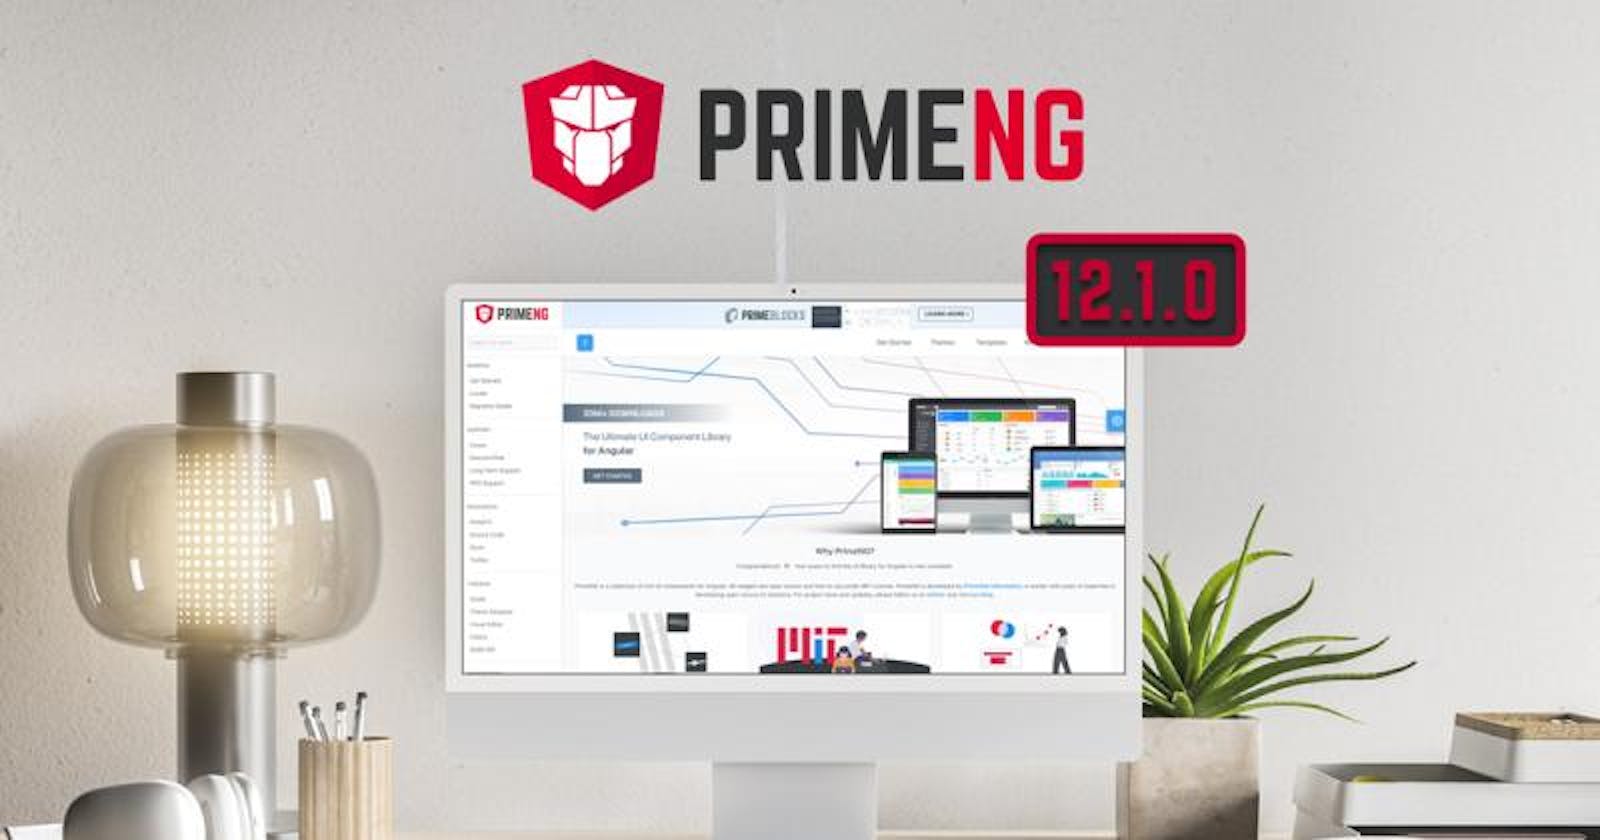 PrimeNG 12.1.0 Released